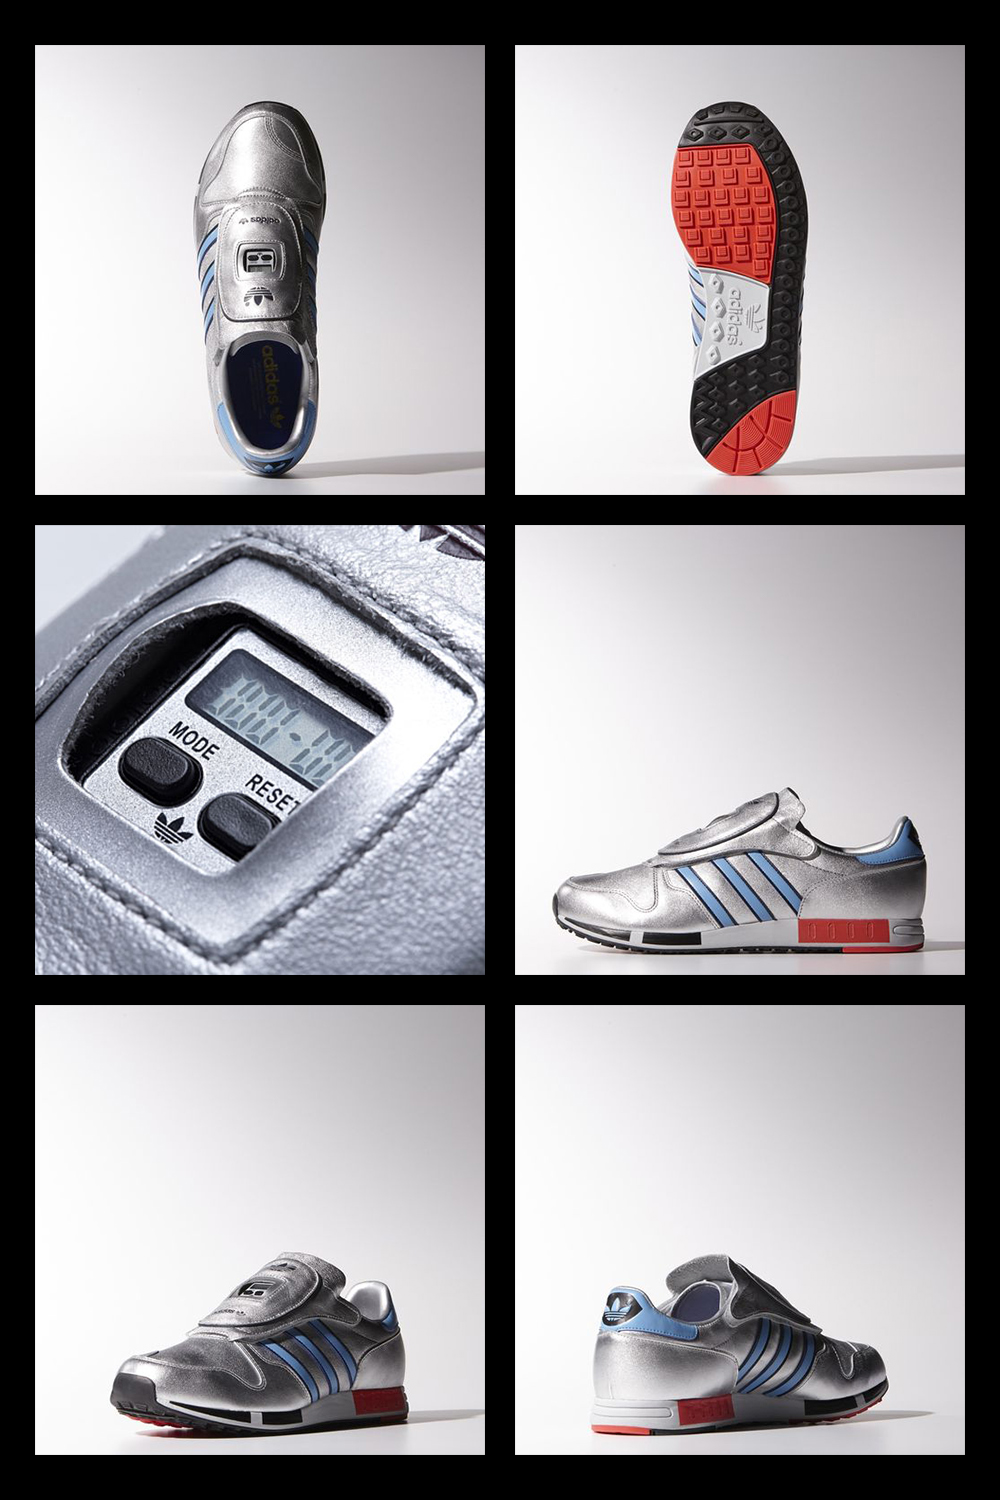 80s Retro-futuristic Posters "adidas Behance